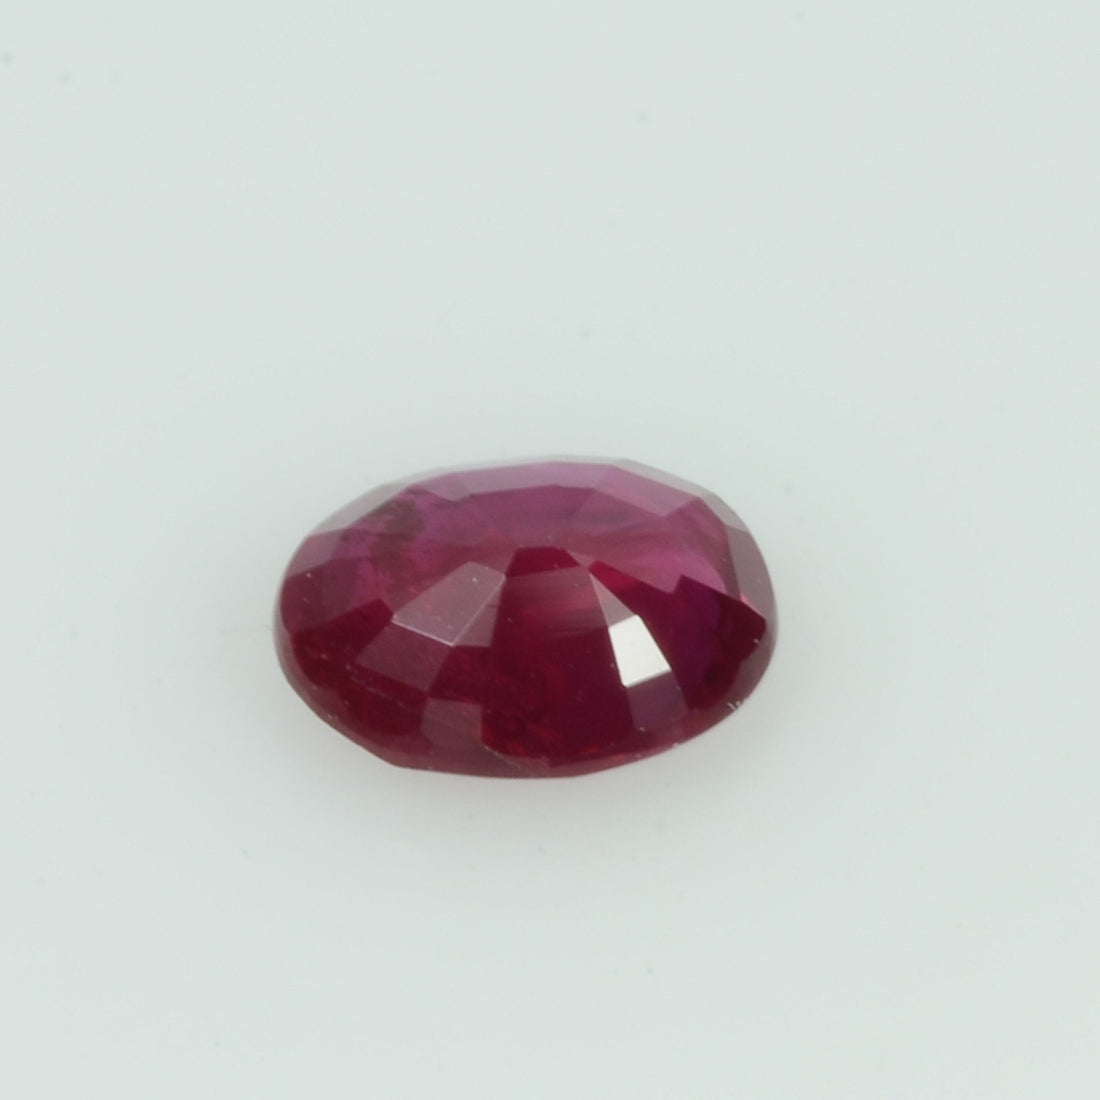 0.56 Cts Natural Burma Ruby Loose Gemstone Oval Cut